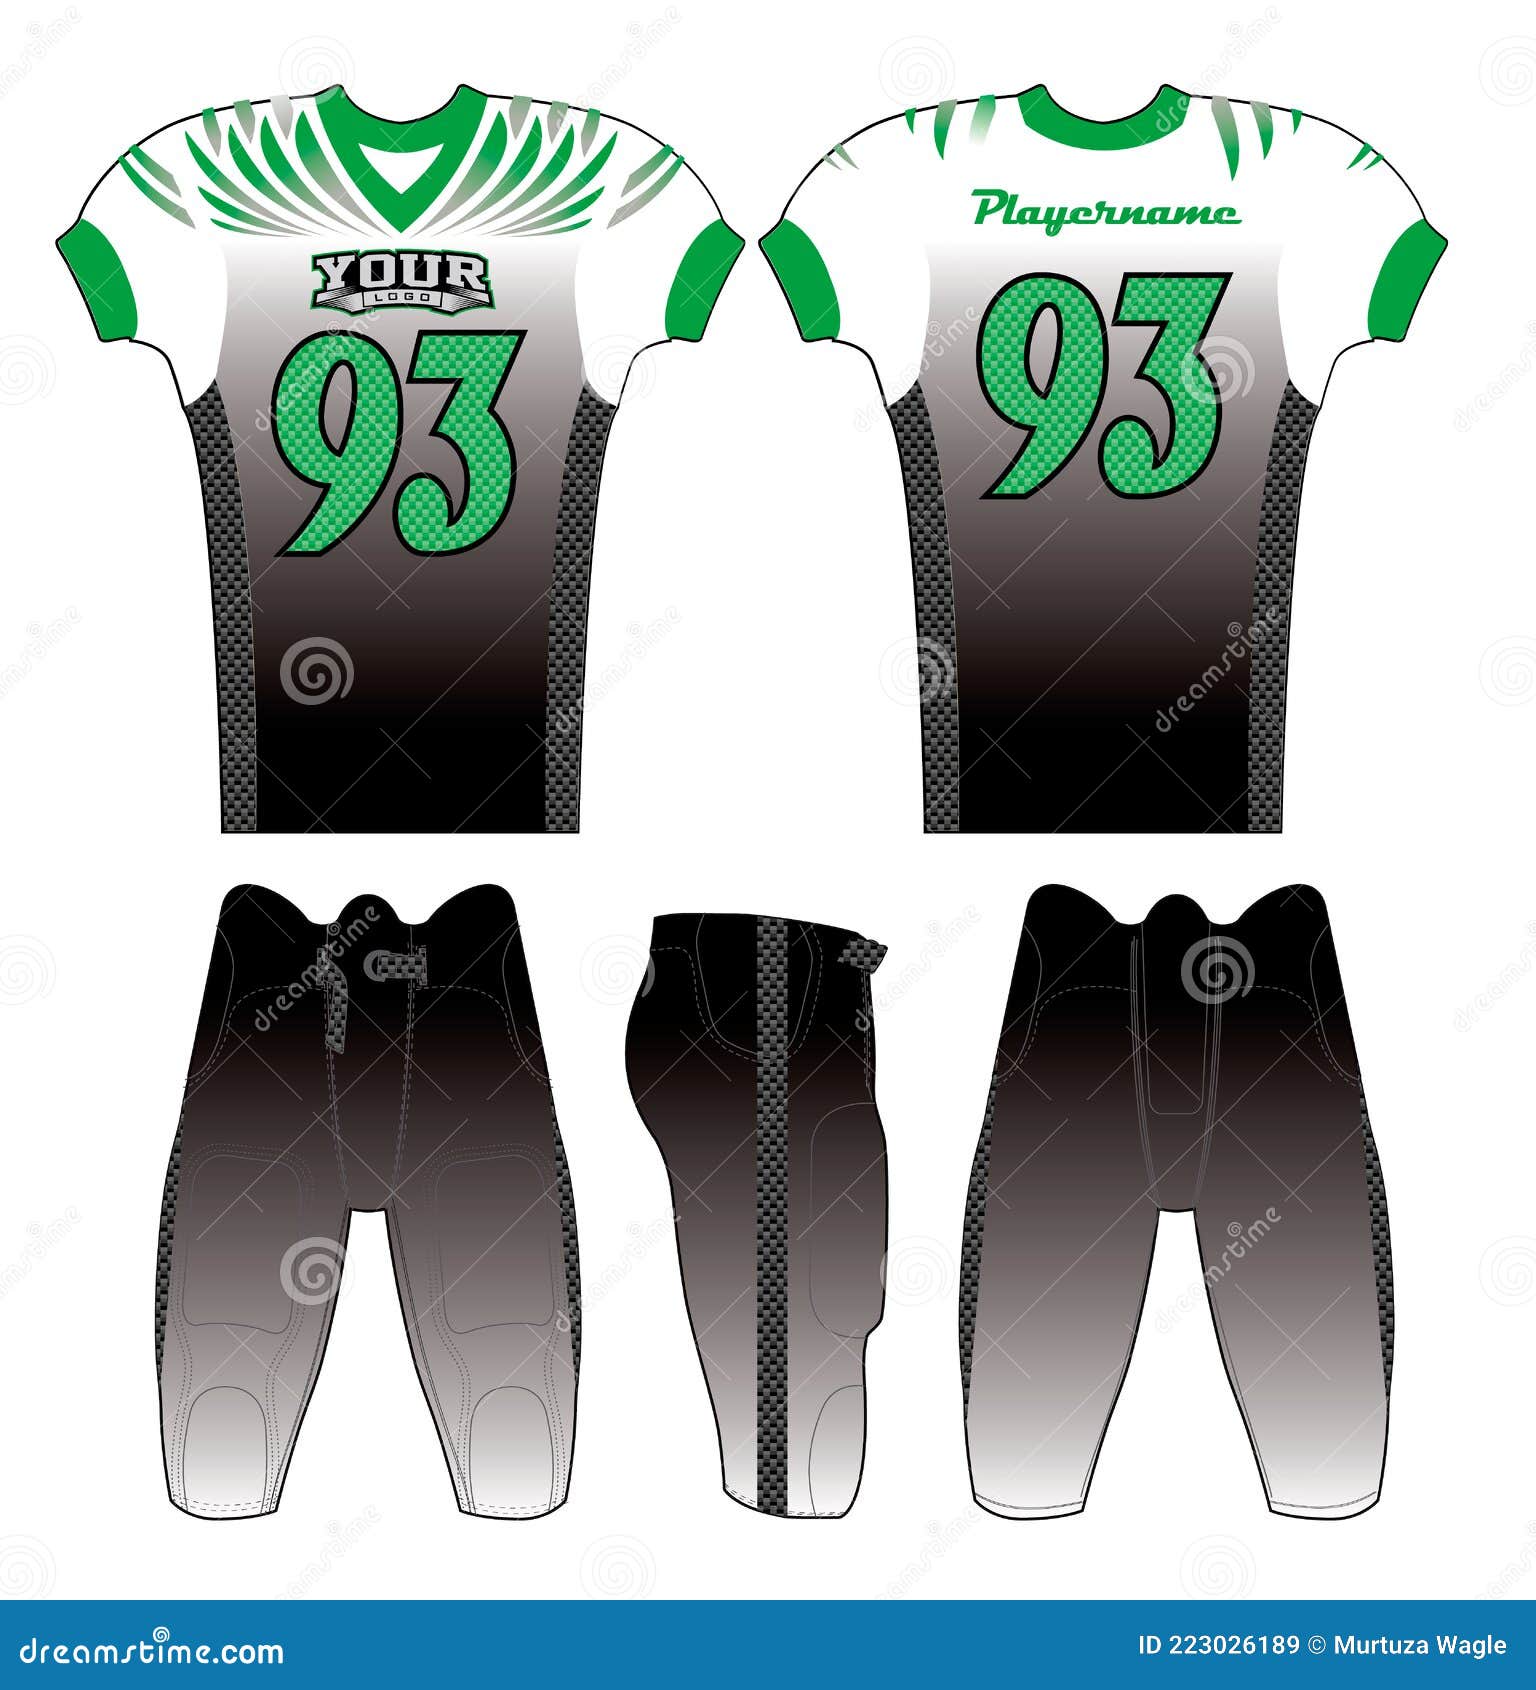 American football jersey mockup template design Vector Image